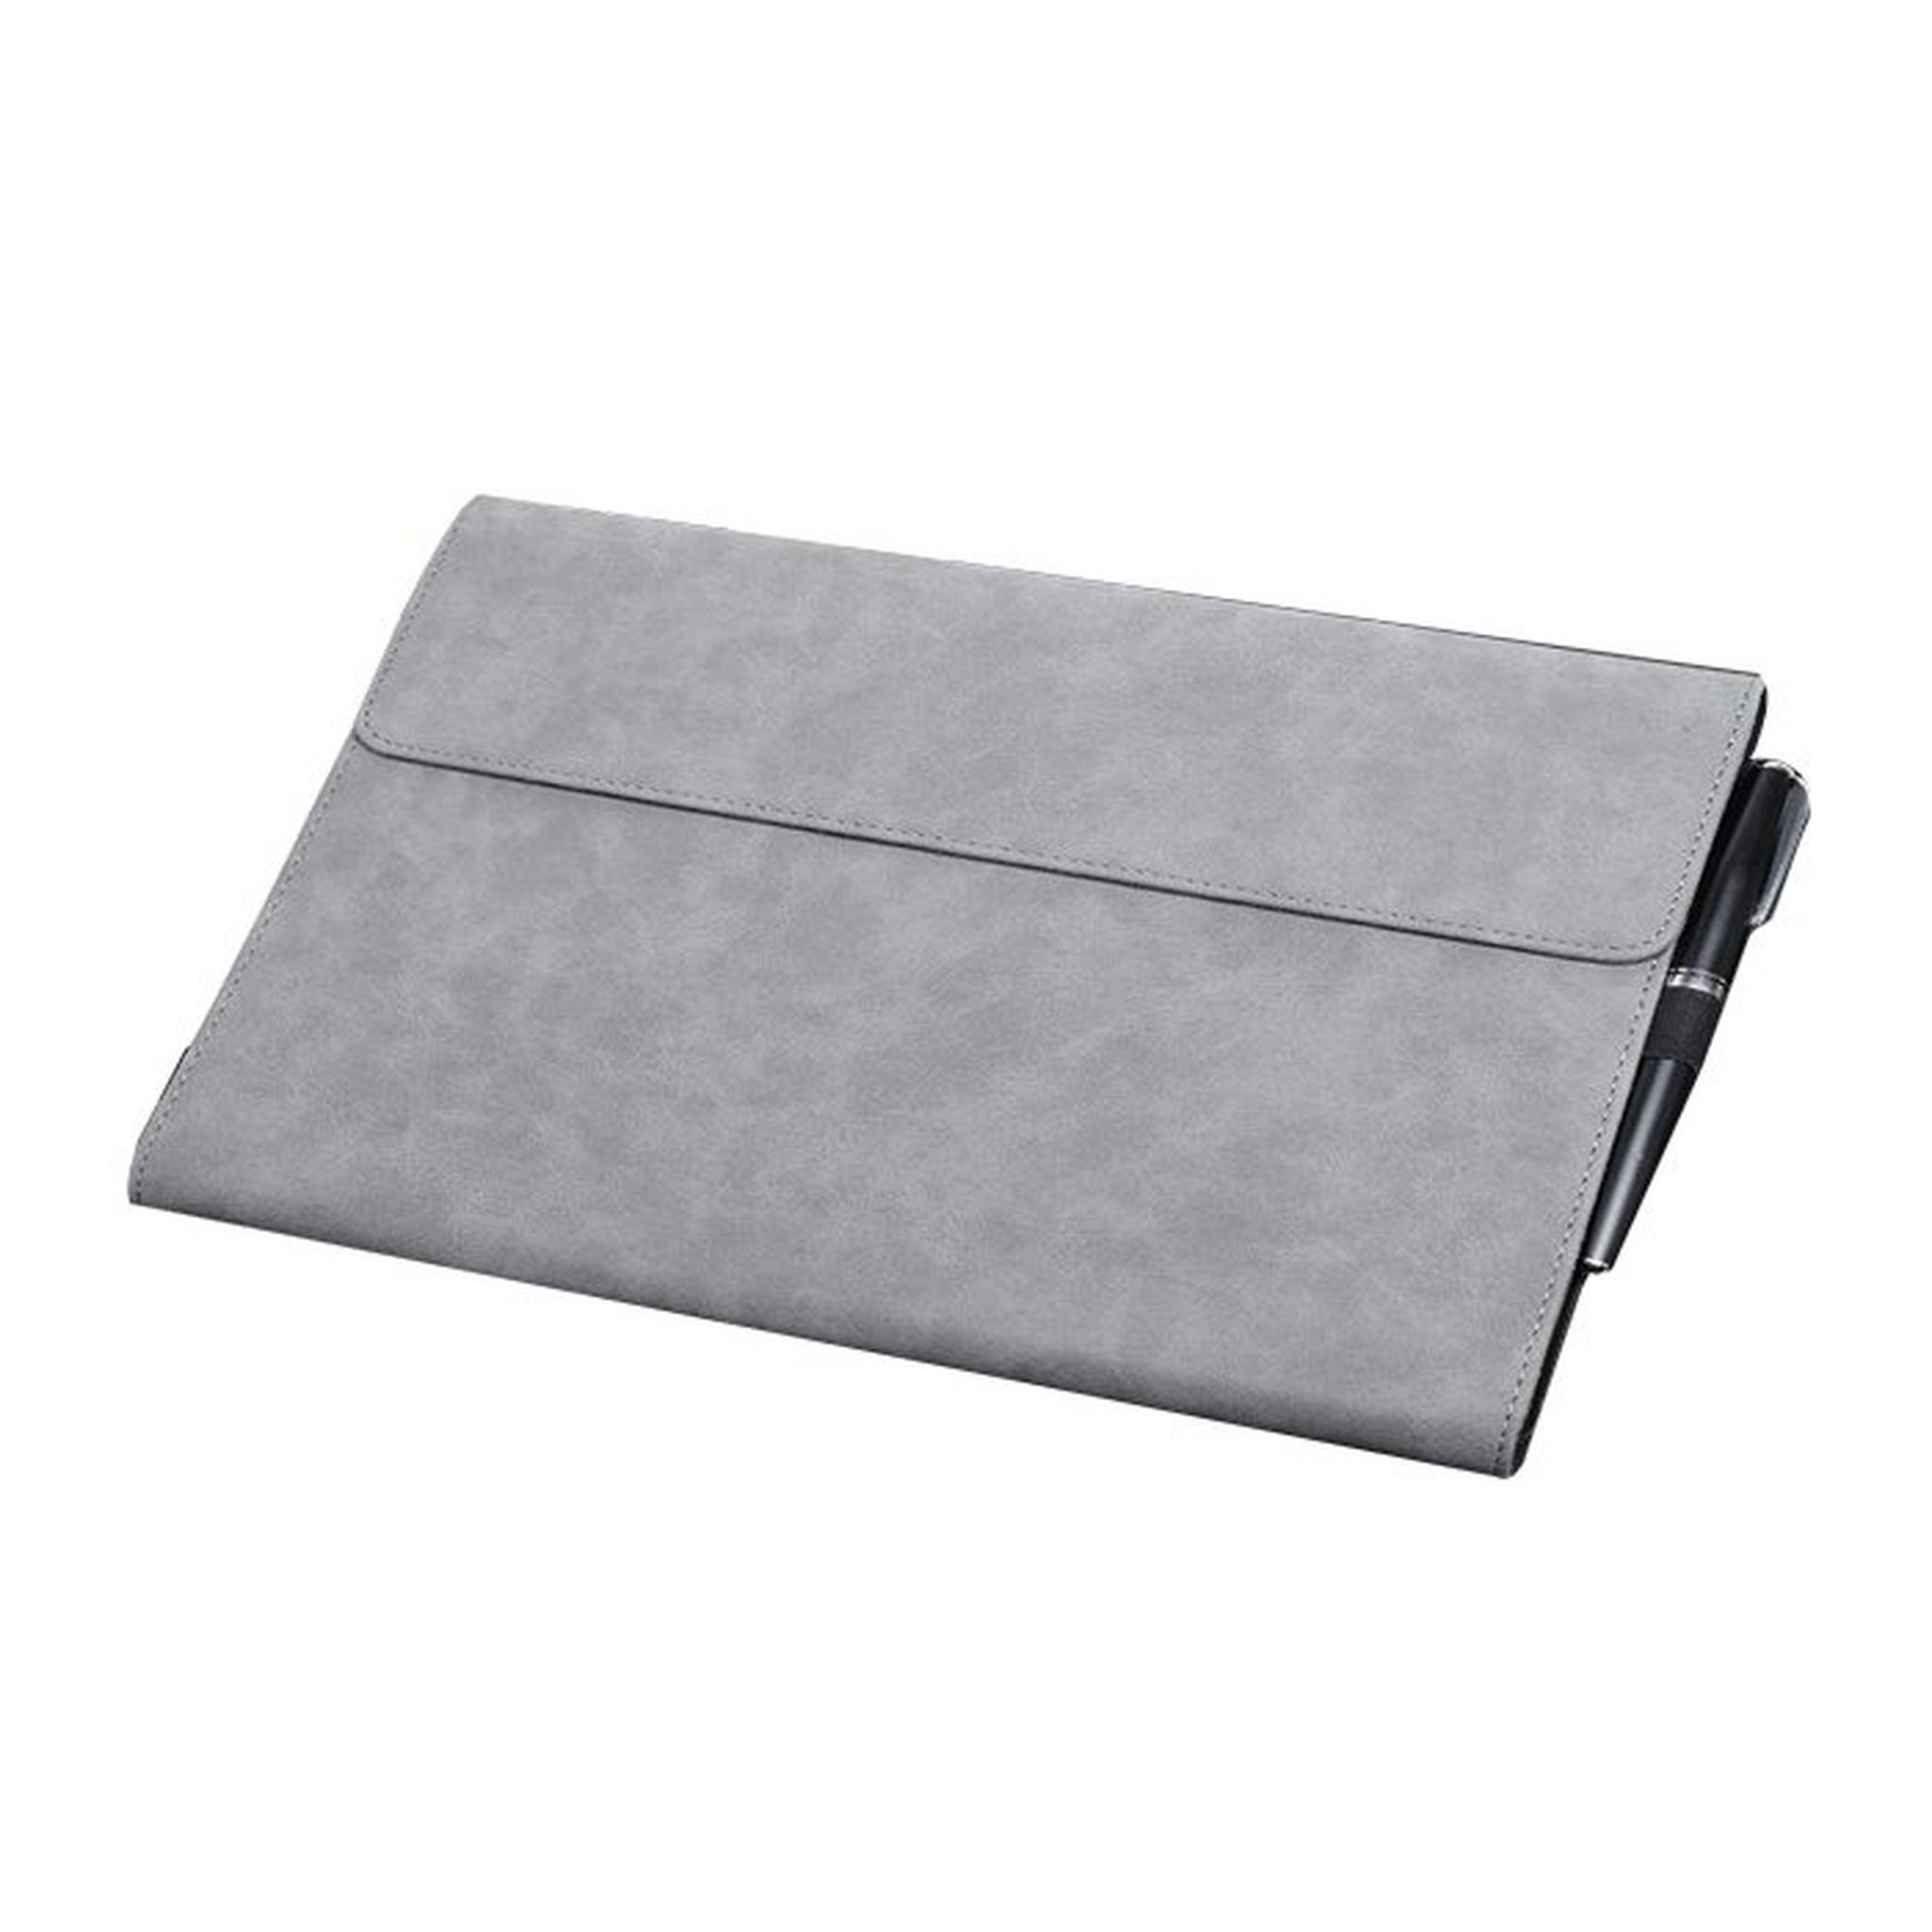 EQ Suitcase 7-inch Tablet Case - Grey